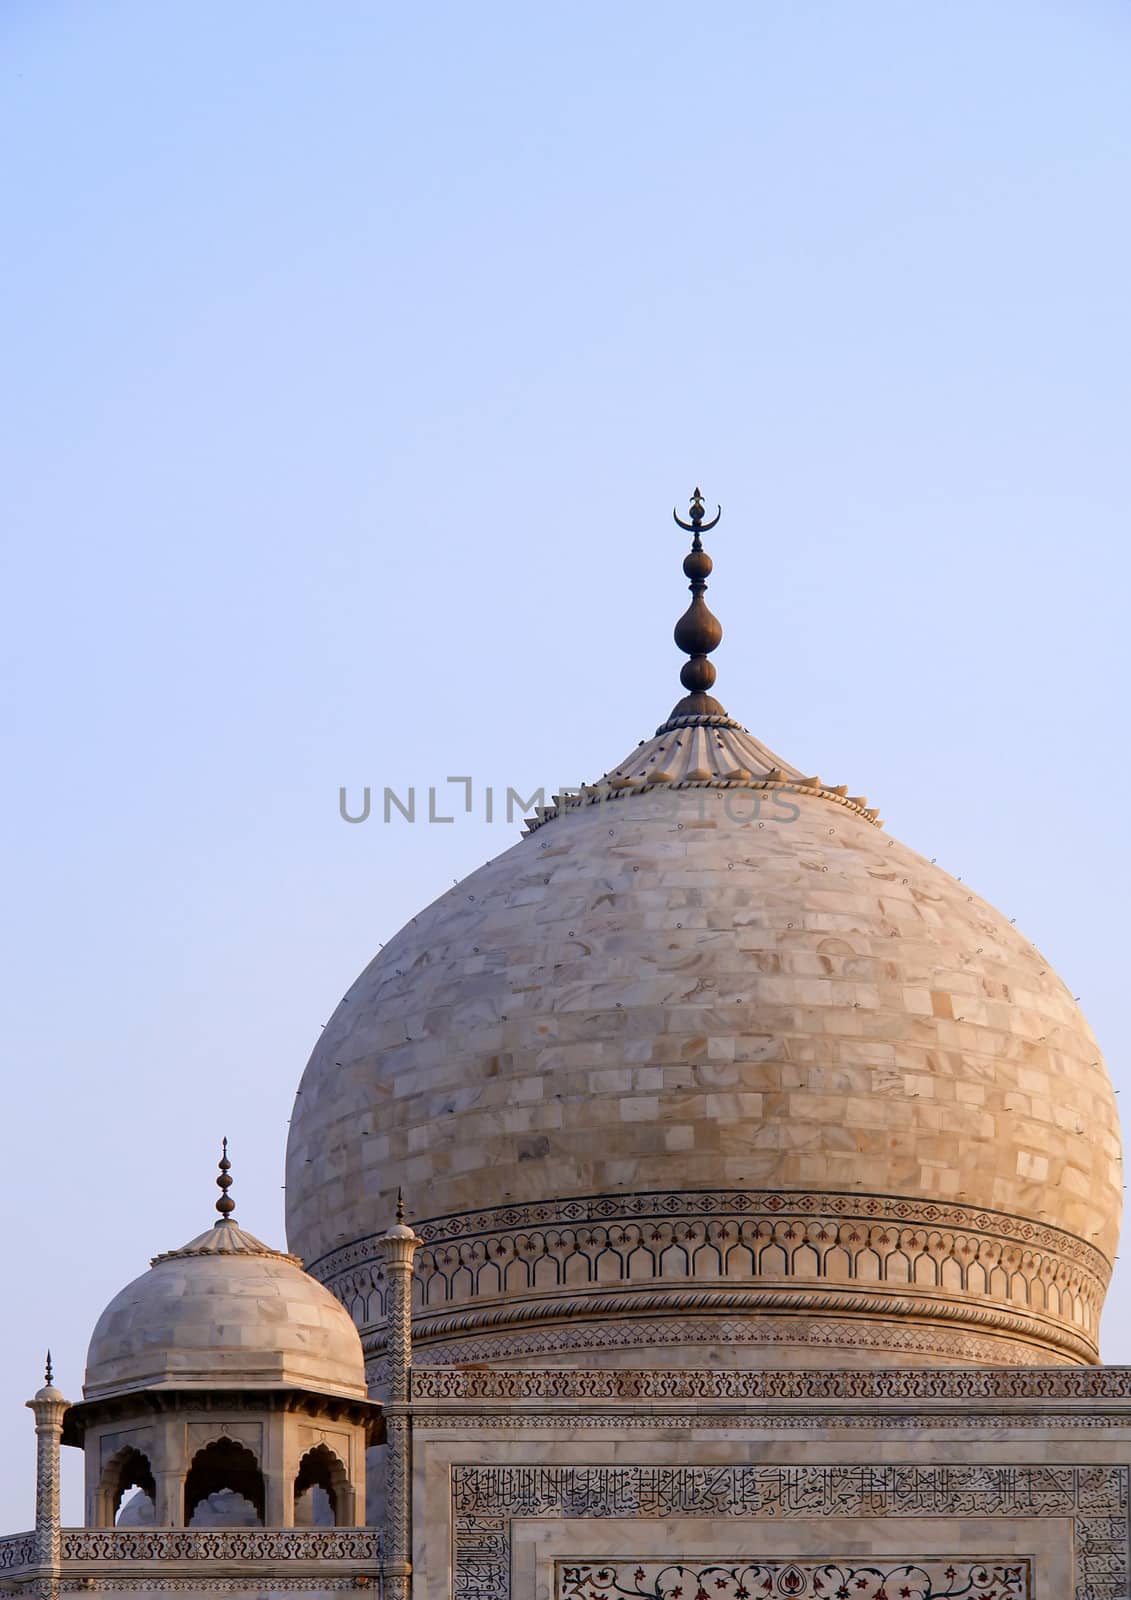 Overview of the Taj Mahal by ptxgarfield